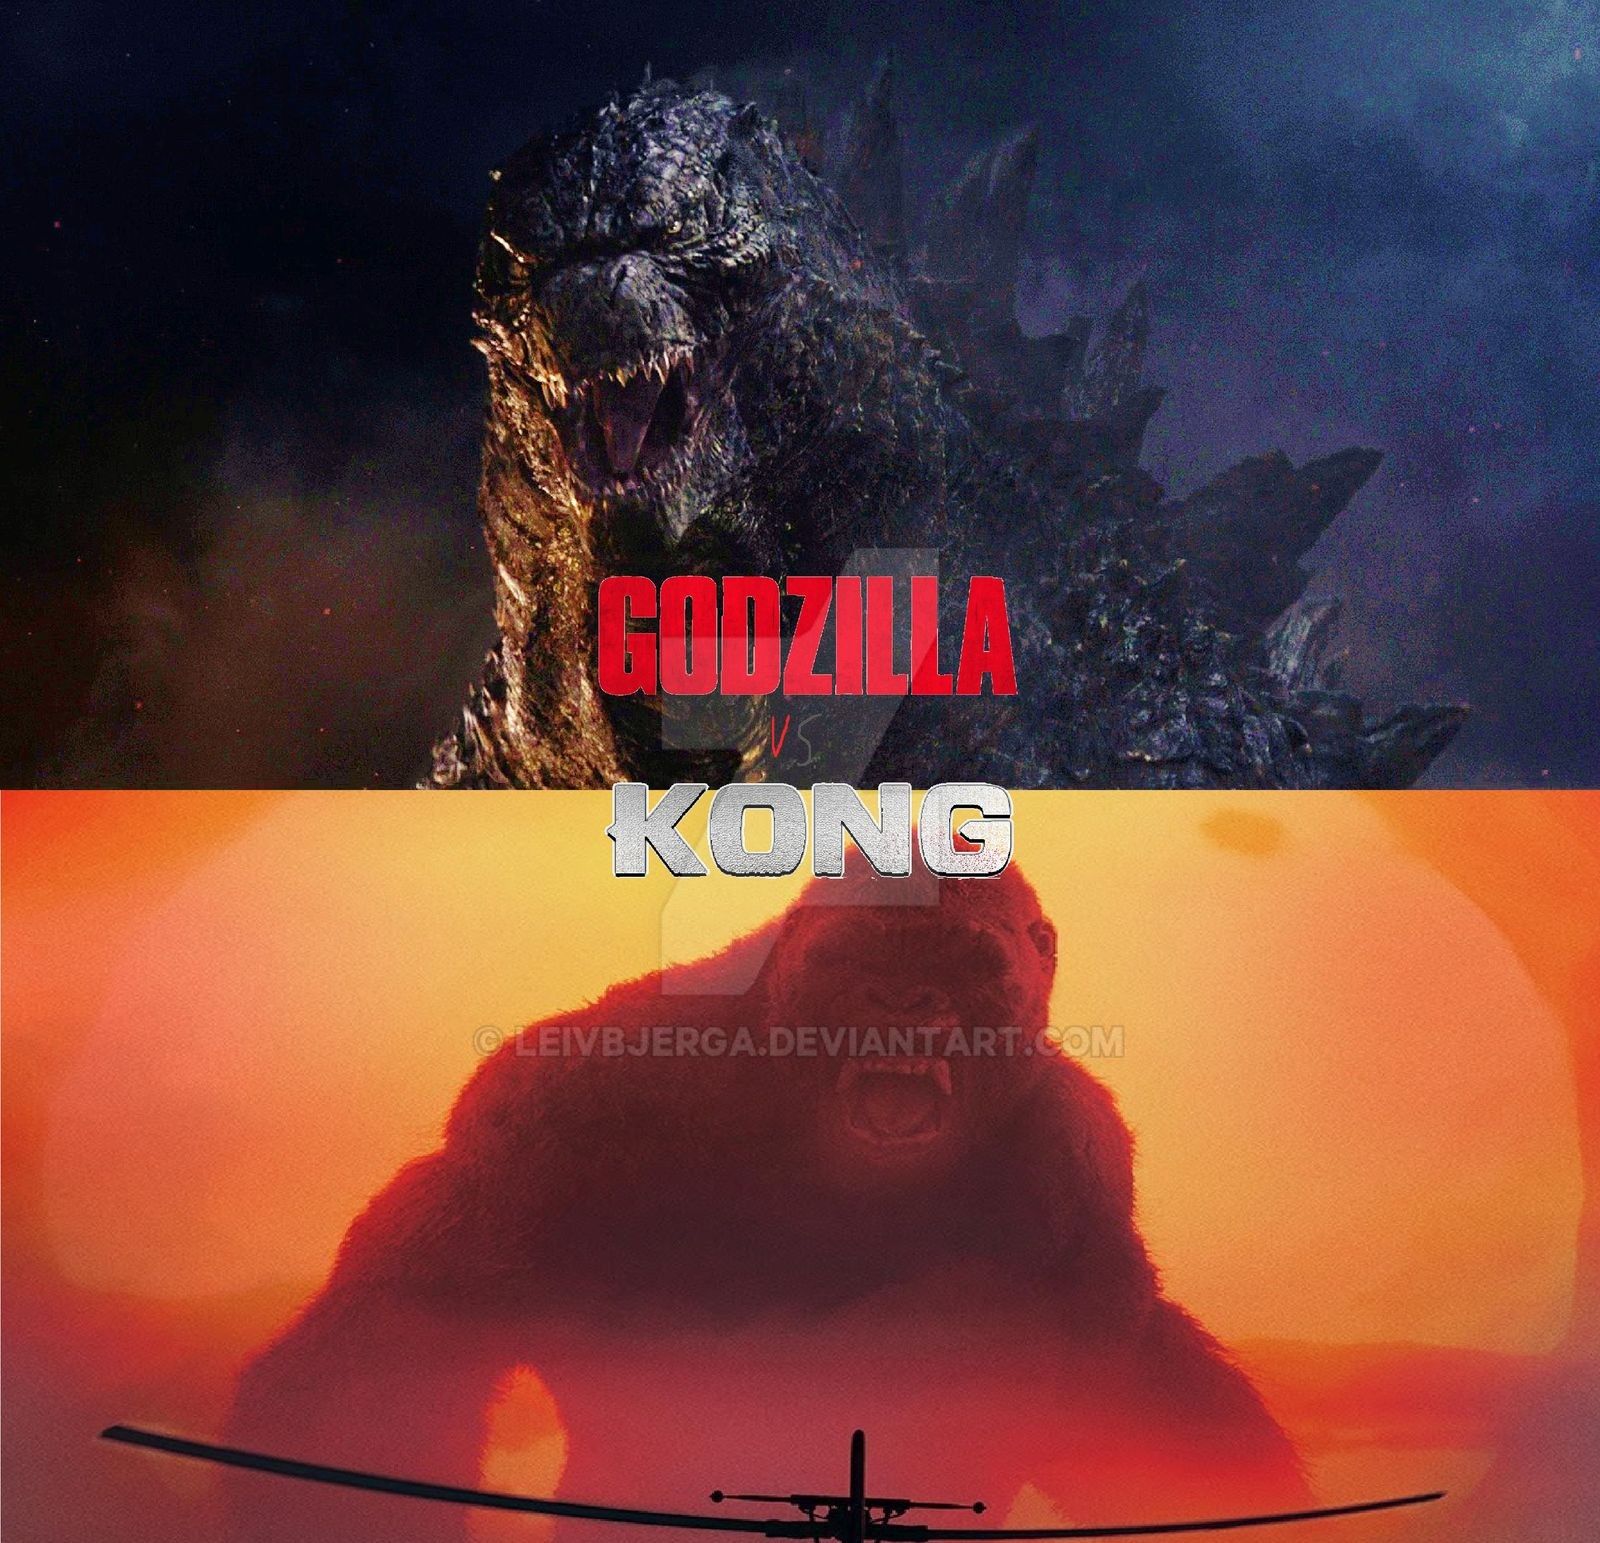 King Kong Vs Godzilla Wallpaper